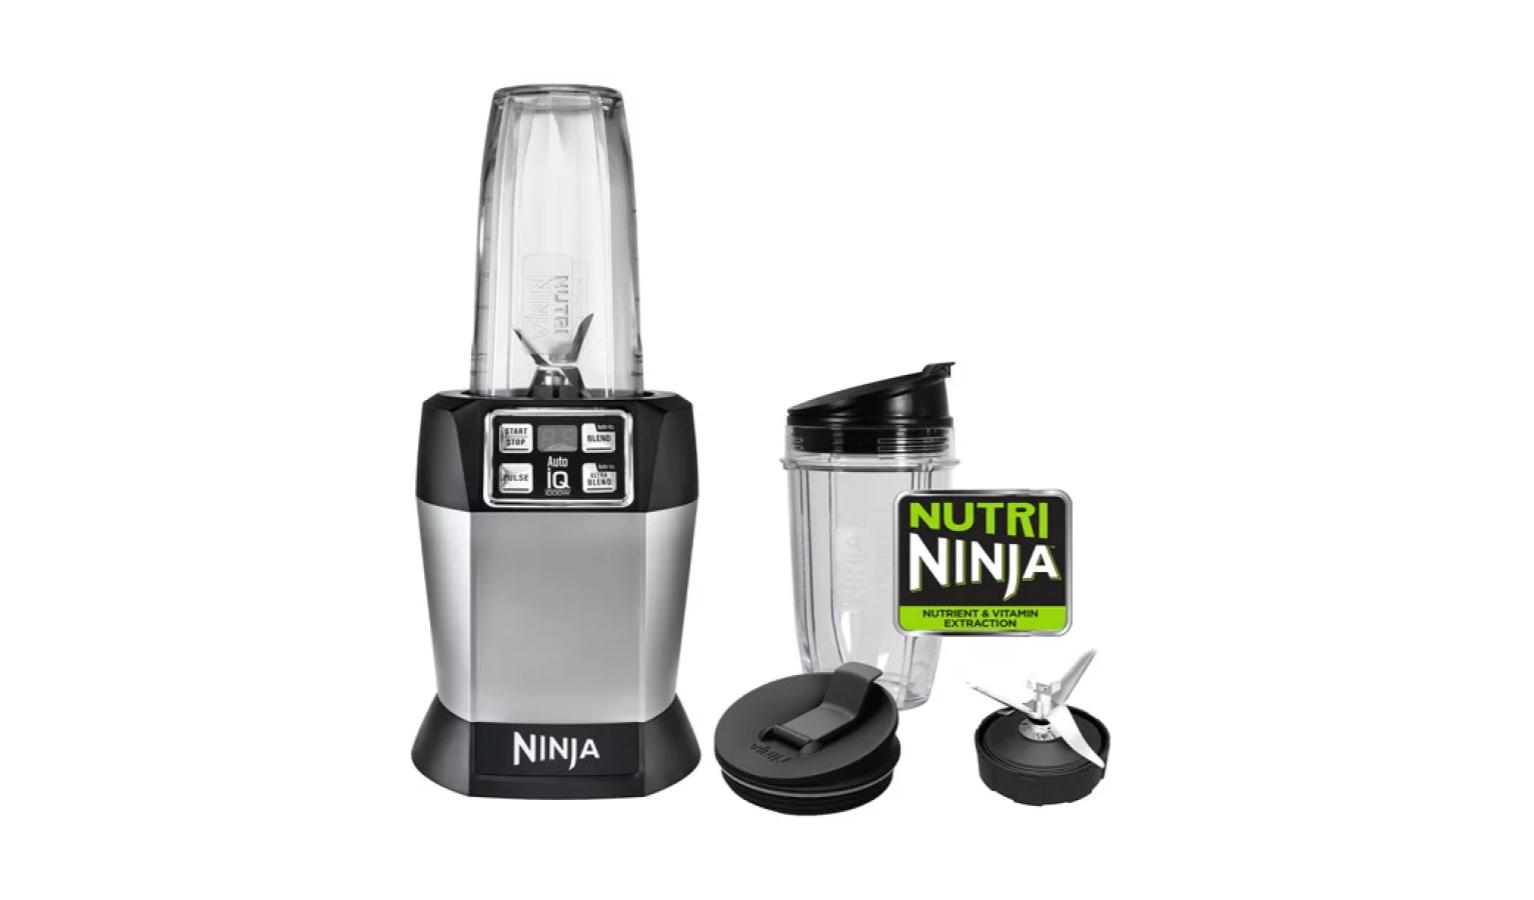 Ninja Nutri Auto-iQ Blender (BL480) | Harvey Norman Malaysia